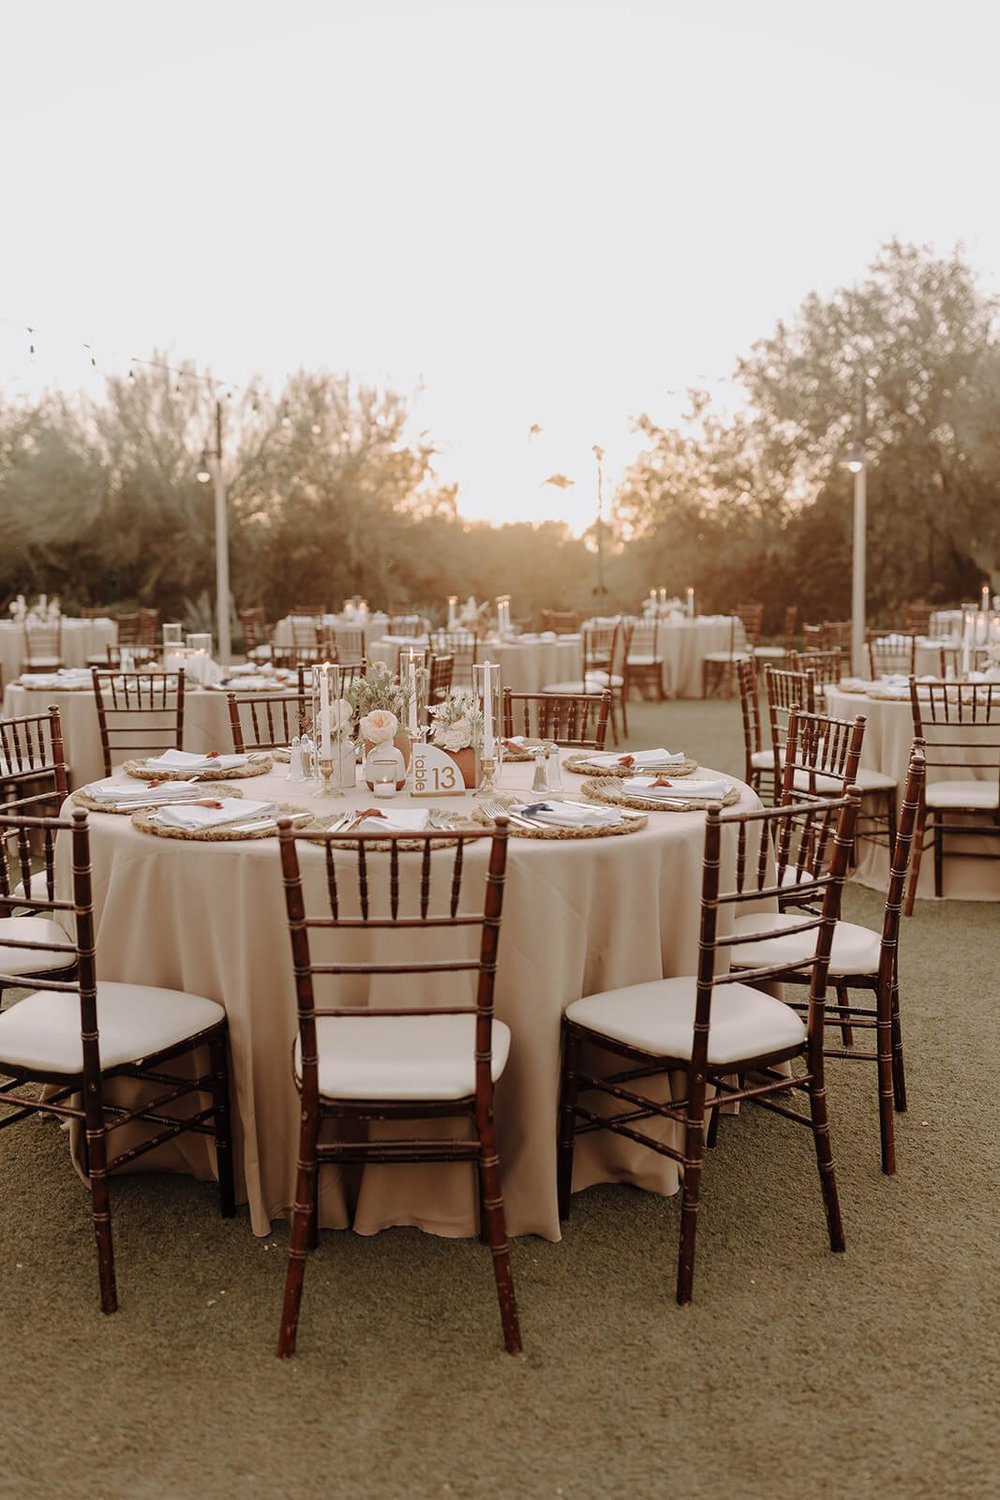 Outdoor desert wedding round tables set for wedding dinner